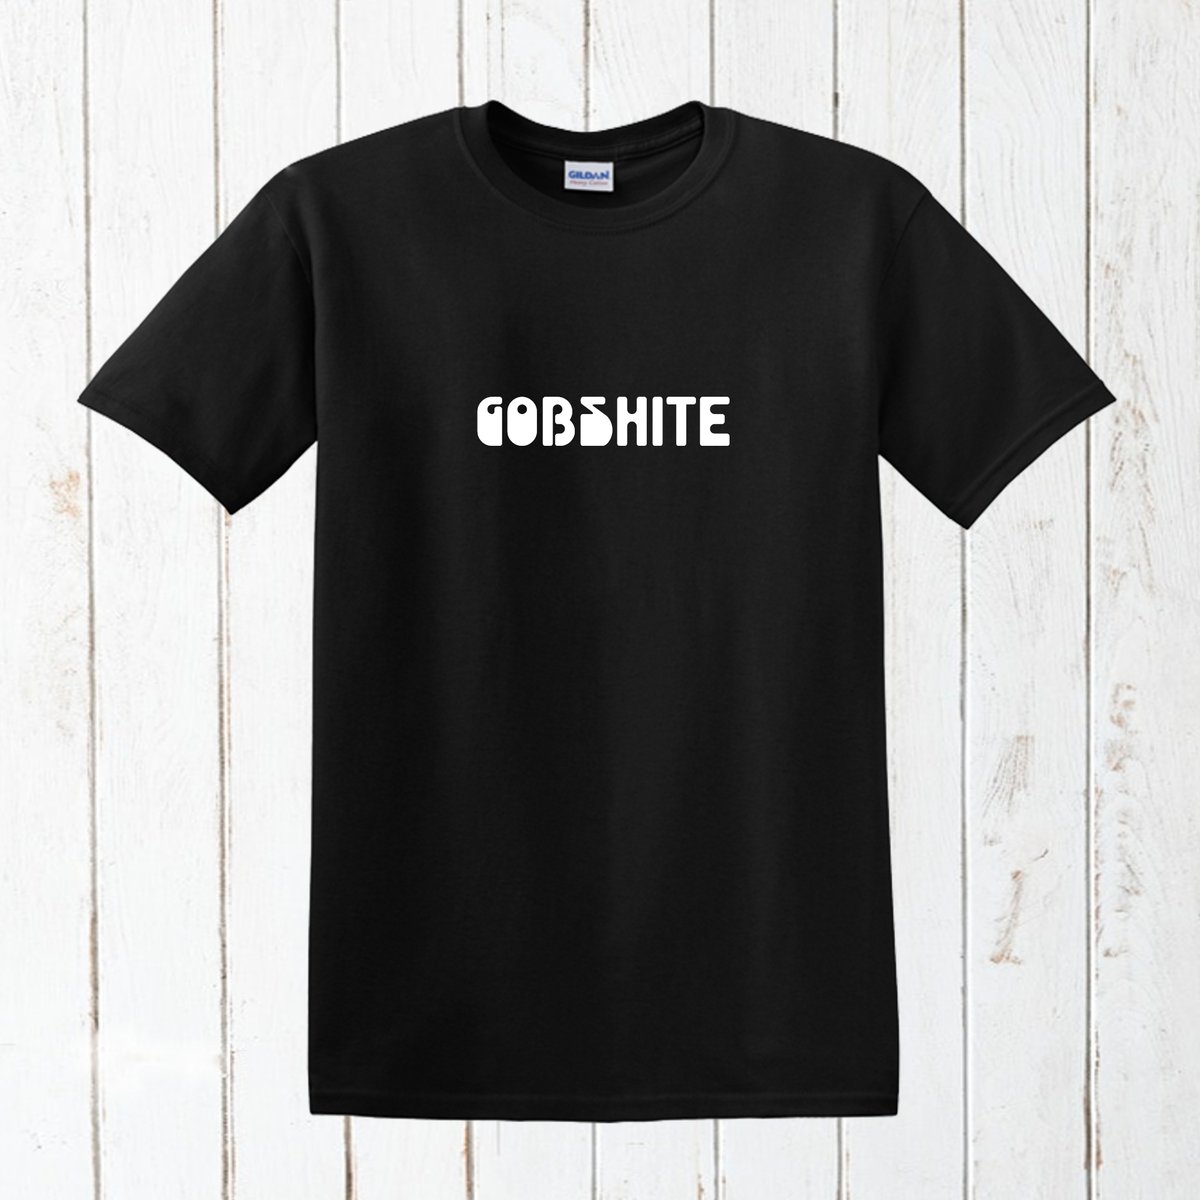 Gobshite T Shirt